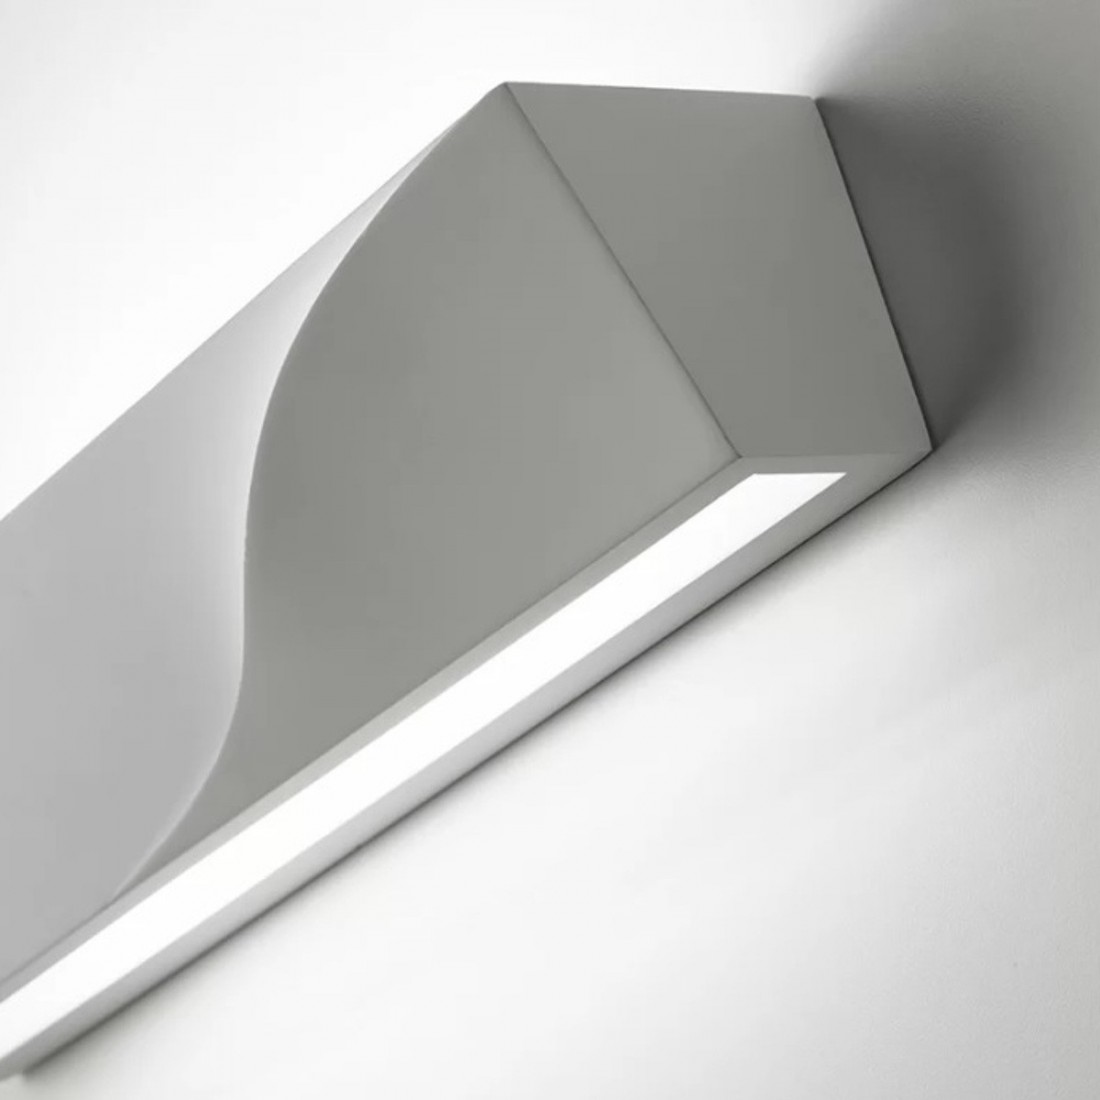 Applique SF-PELLENE T201 G9 LED 35.5CM gesso bianco verniciabile lampada parete biemissione luce indiretta interno